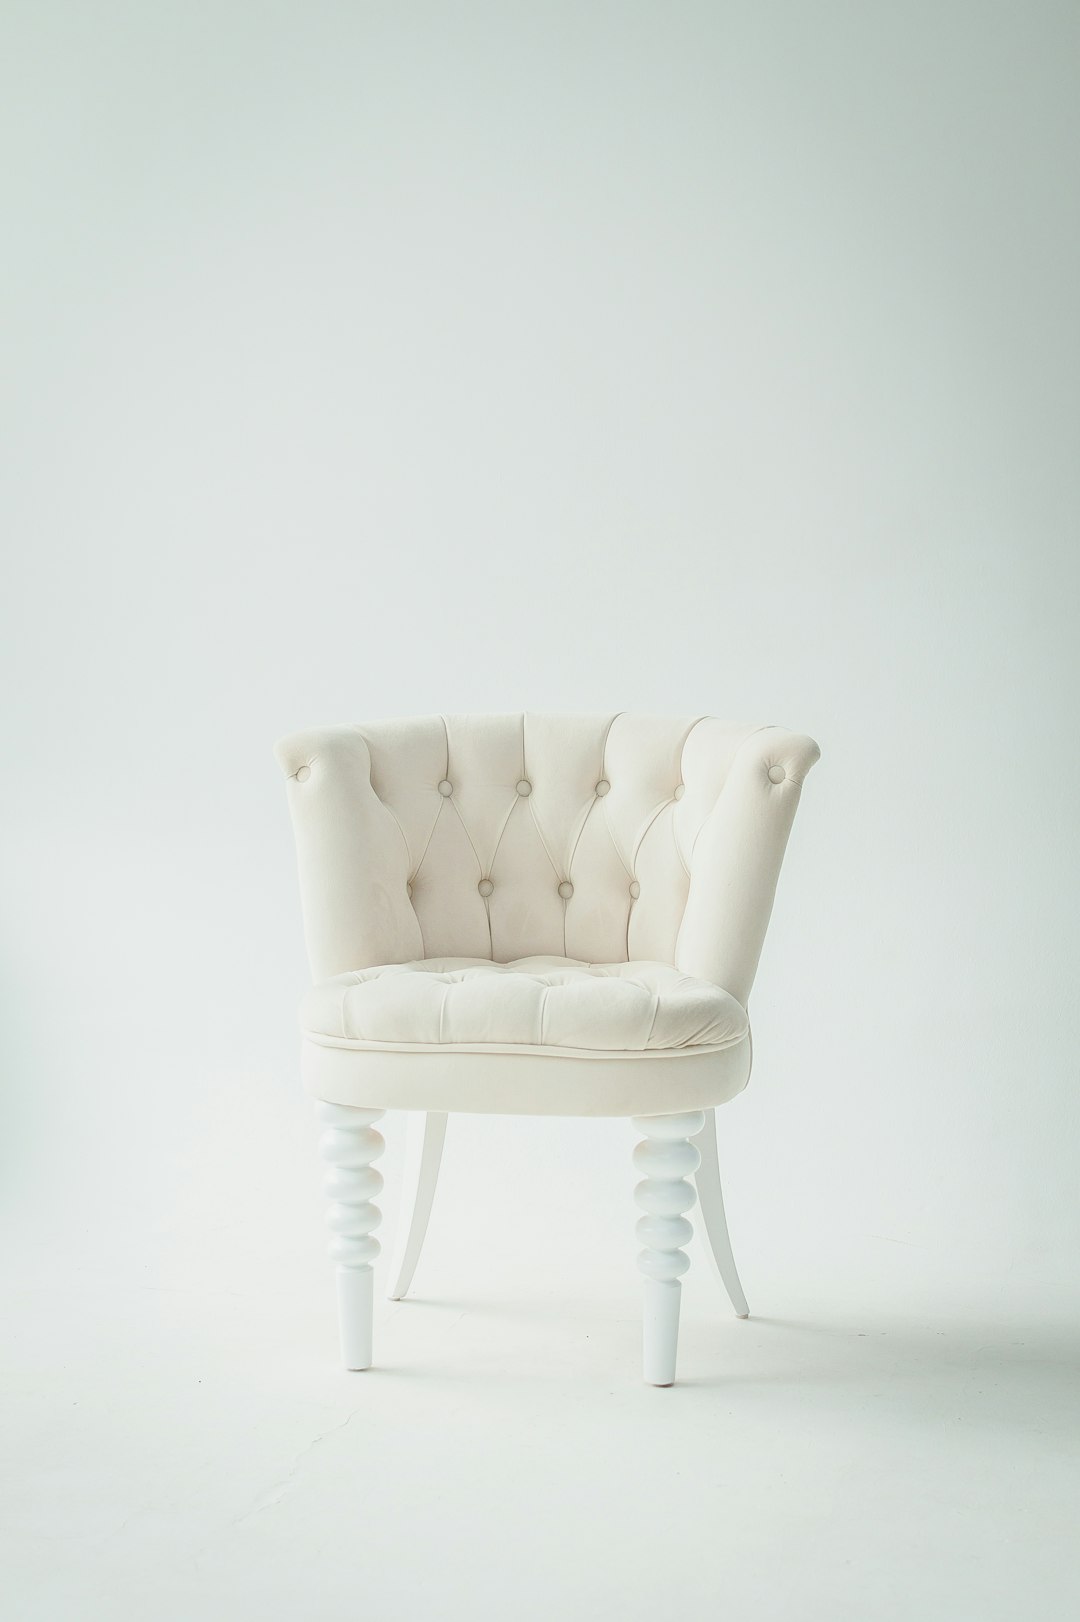  tufted white leather sofa chair armchair